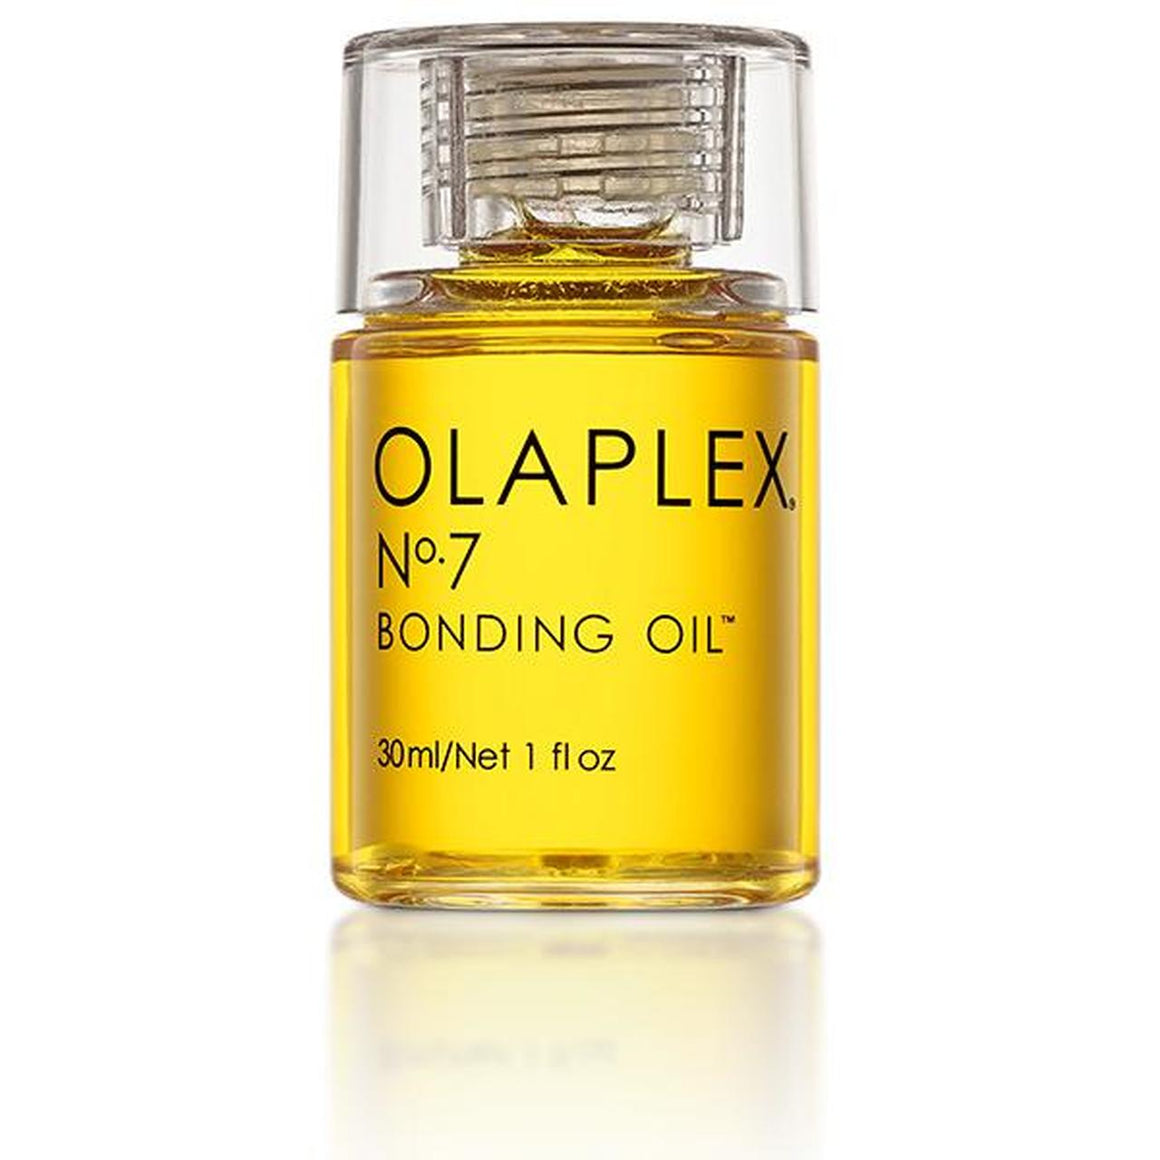 OLAPLEX NO 7 BONDING OIL 30ML